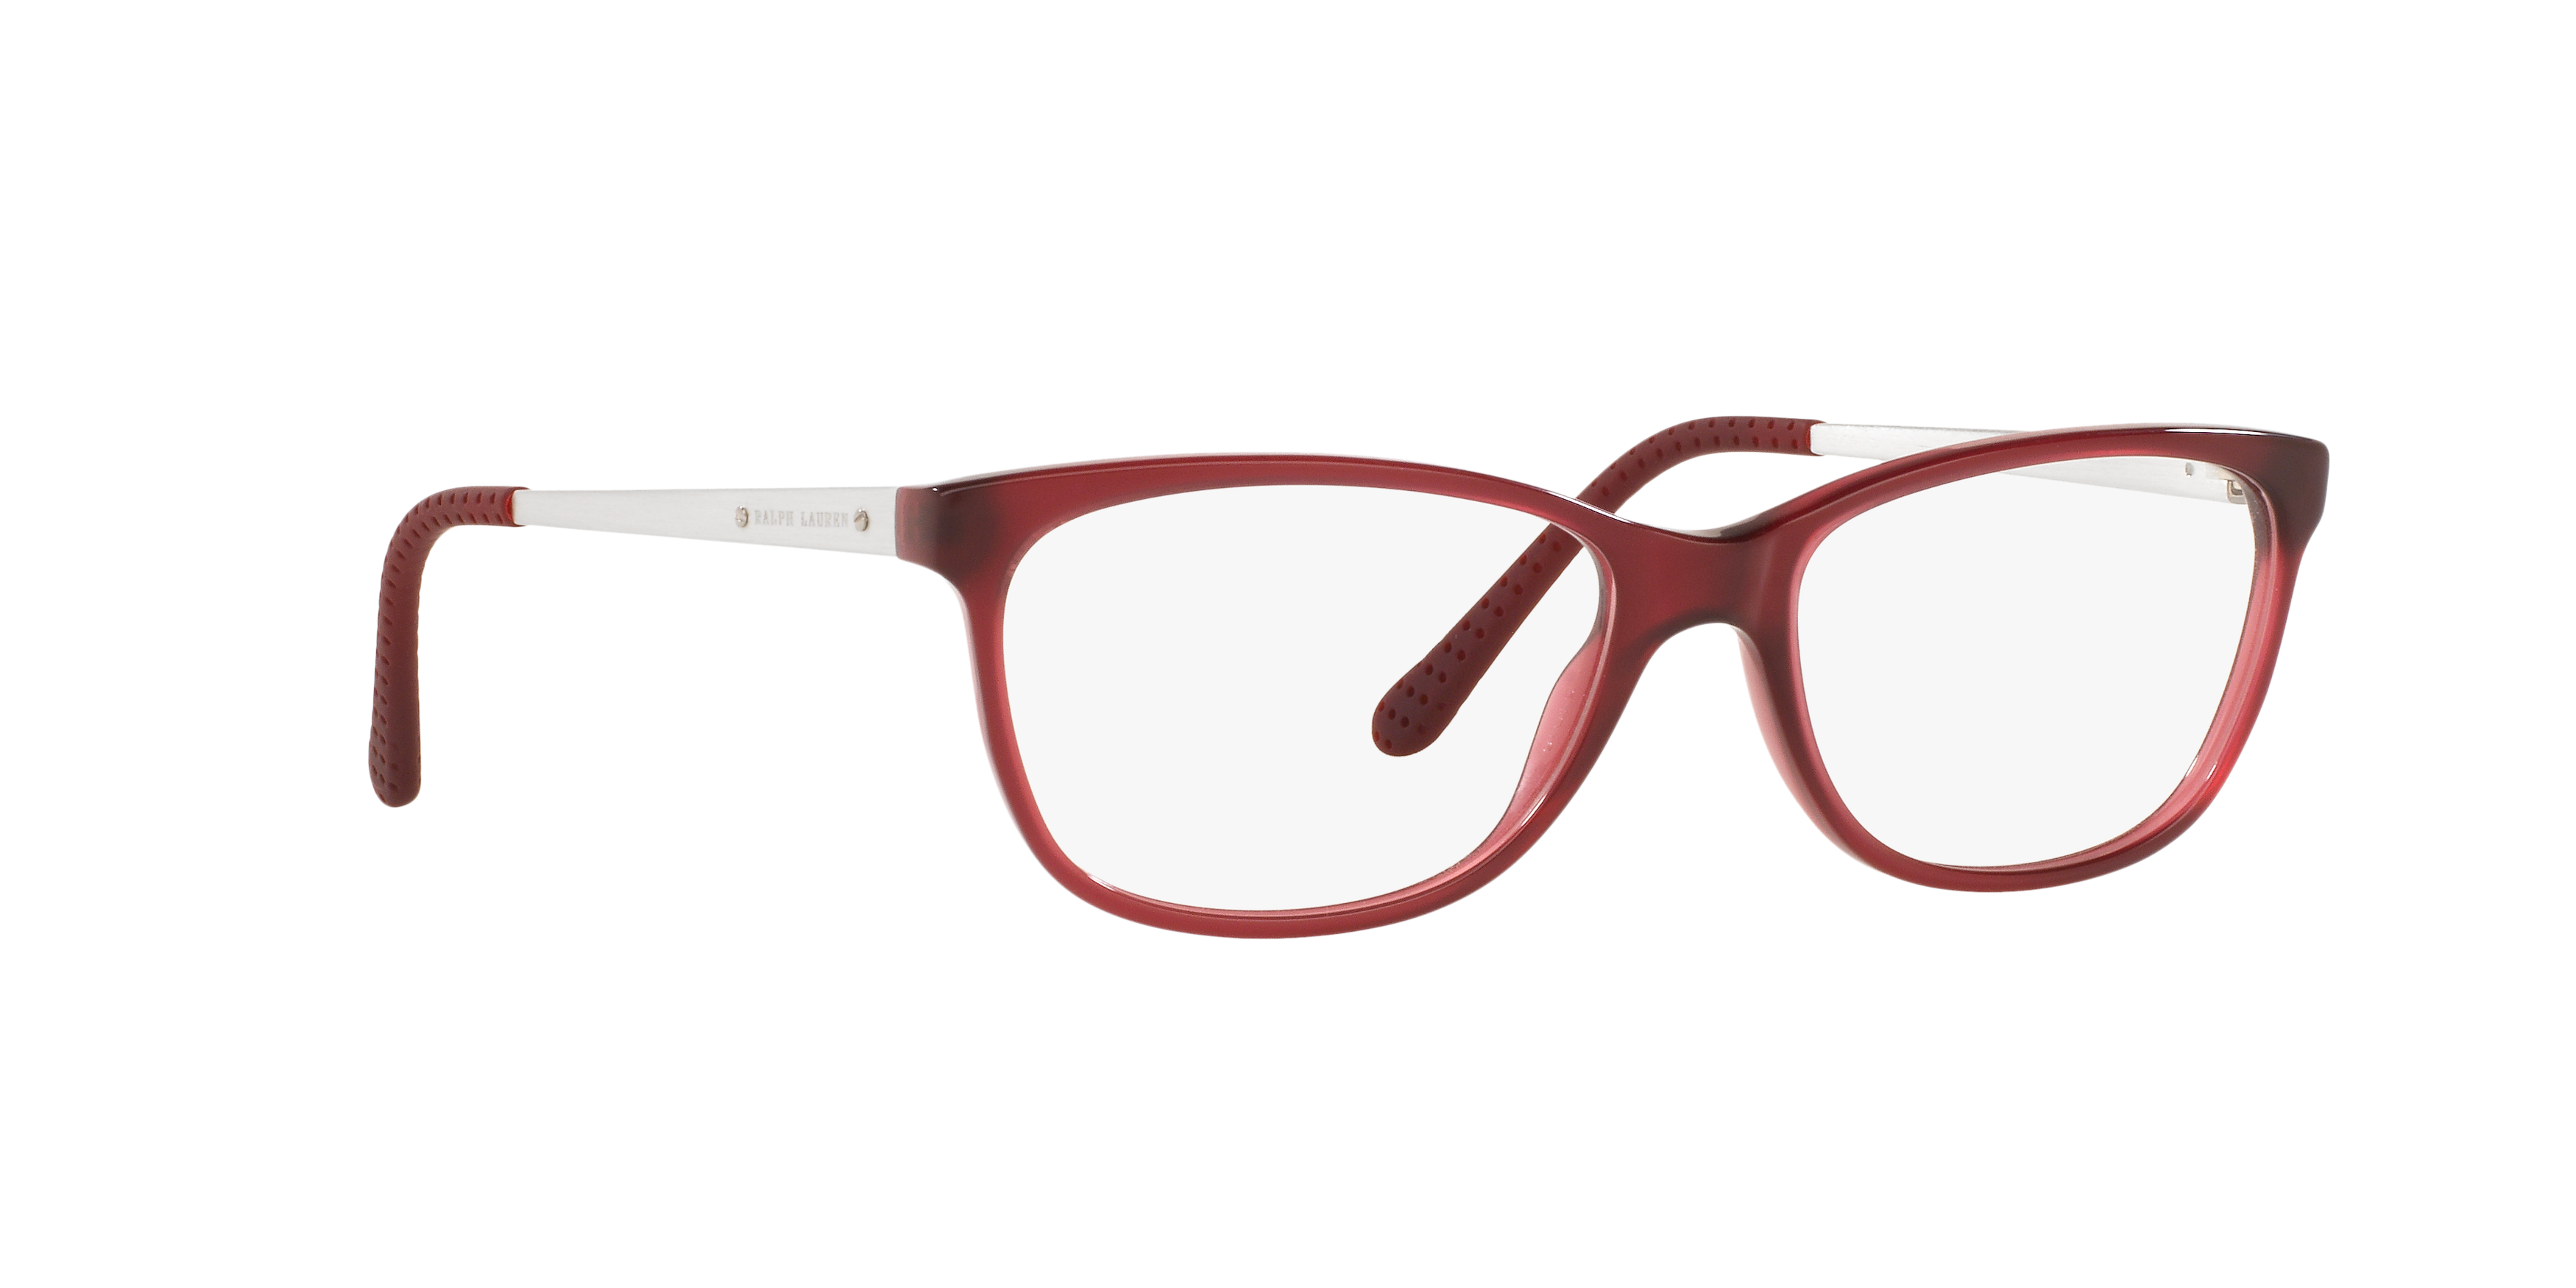 Angle_Right01 Ralph Lauren RL 6135 (5144) Glasses Transparent / Red